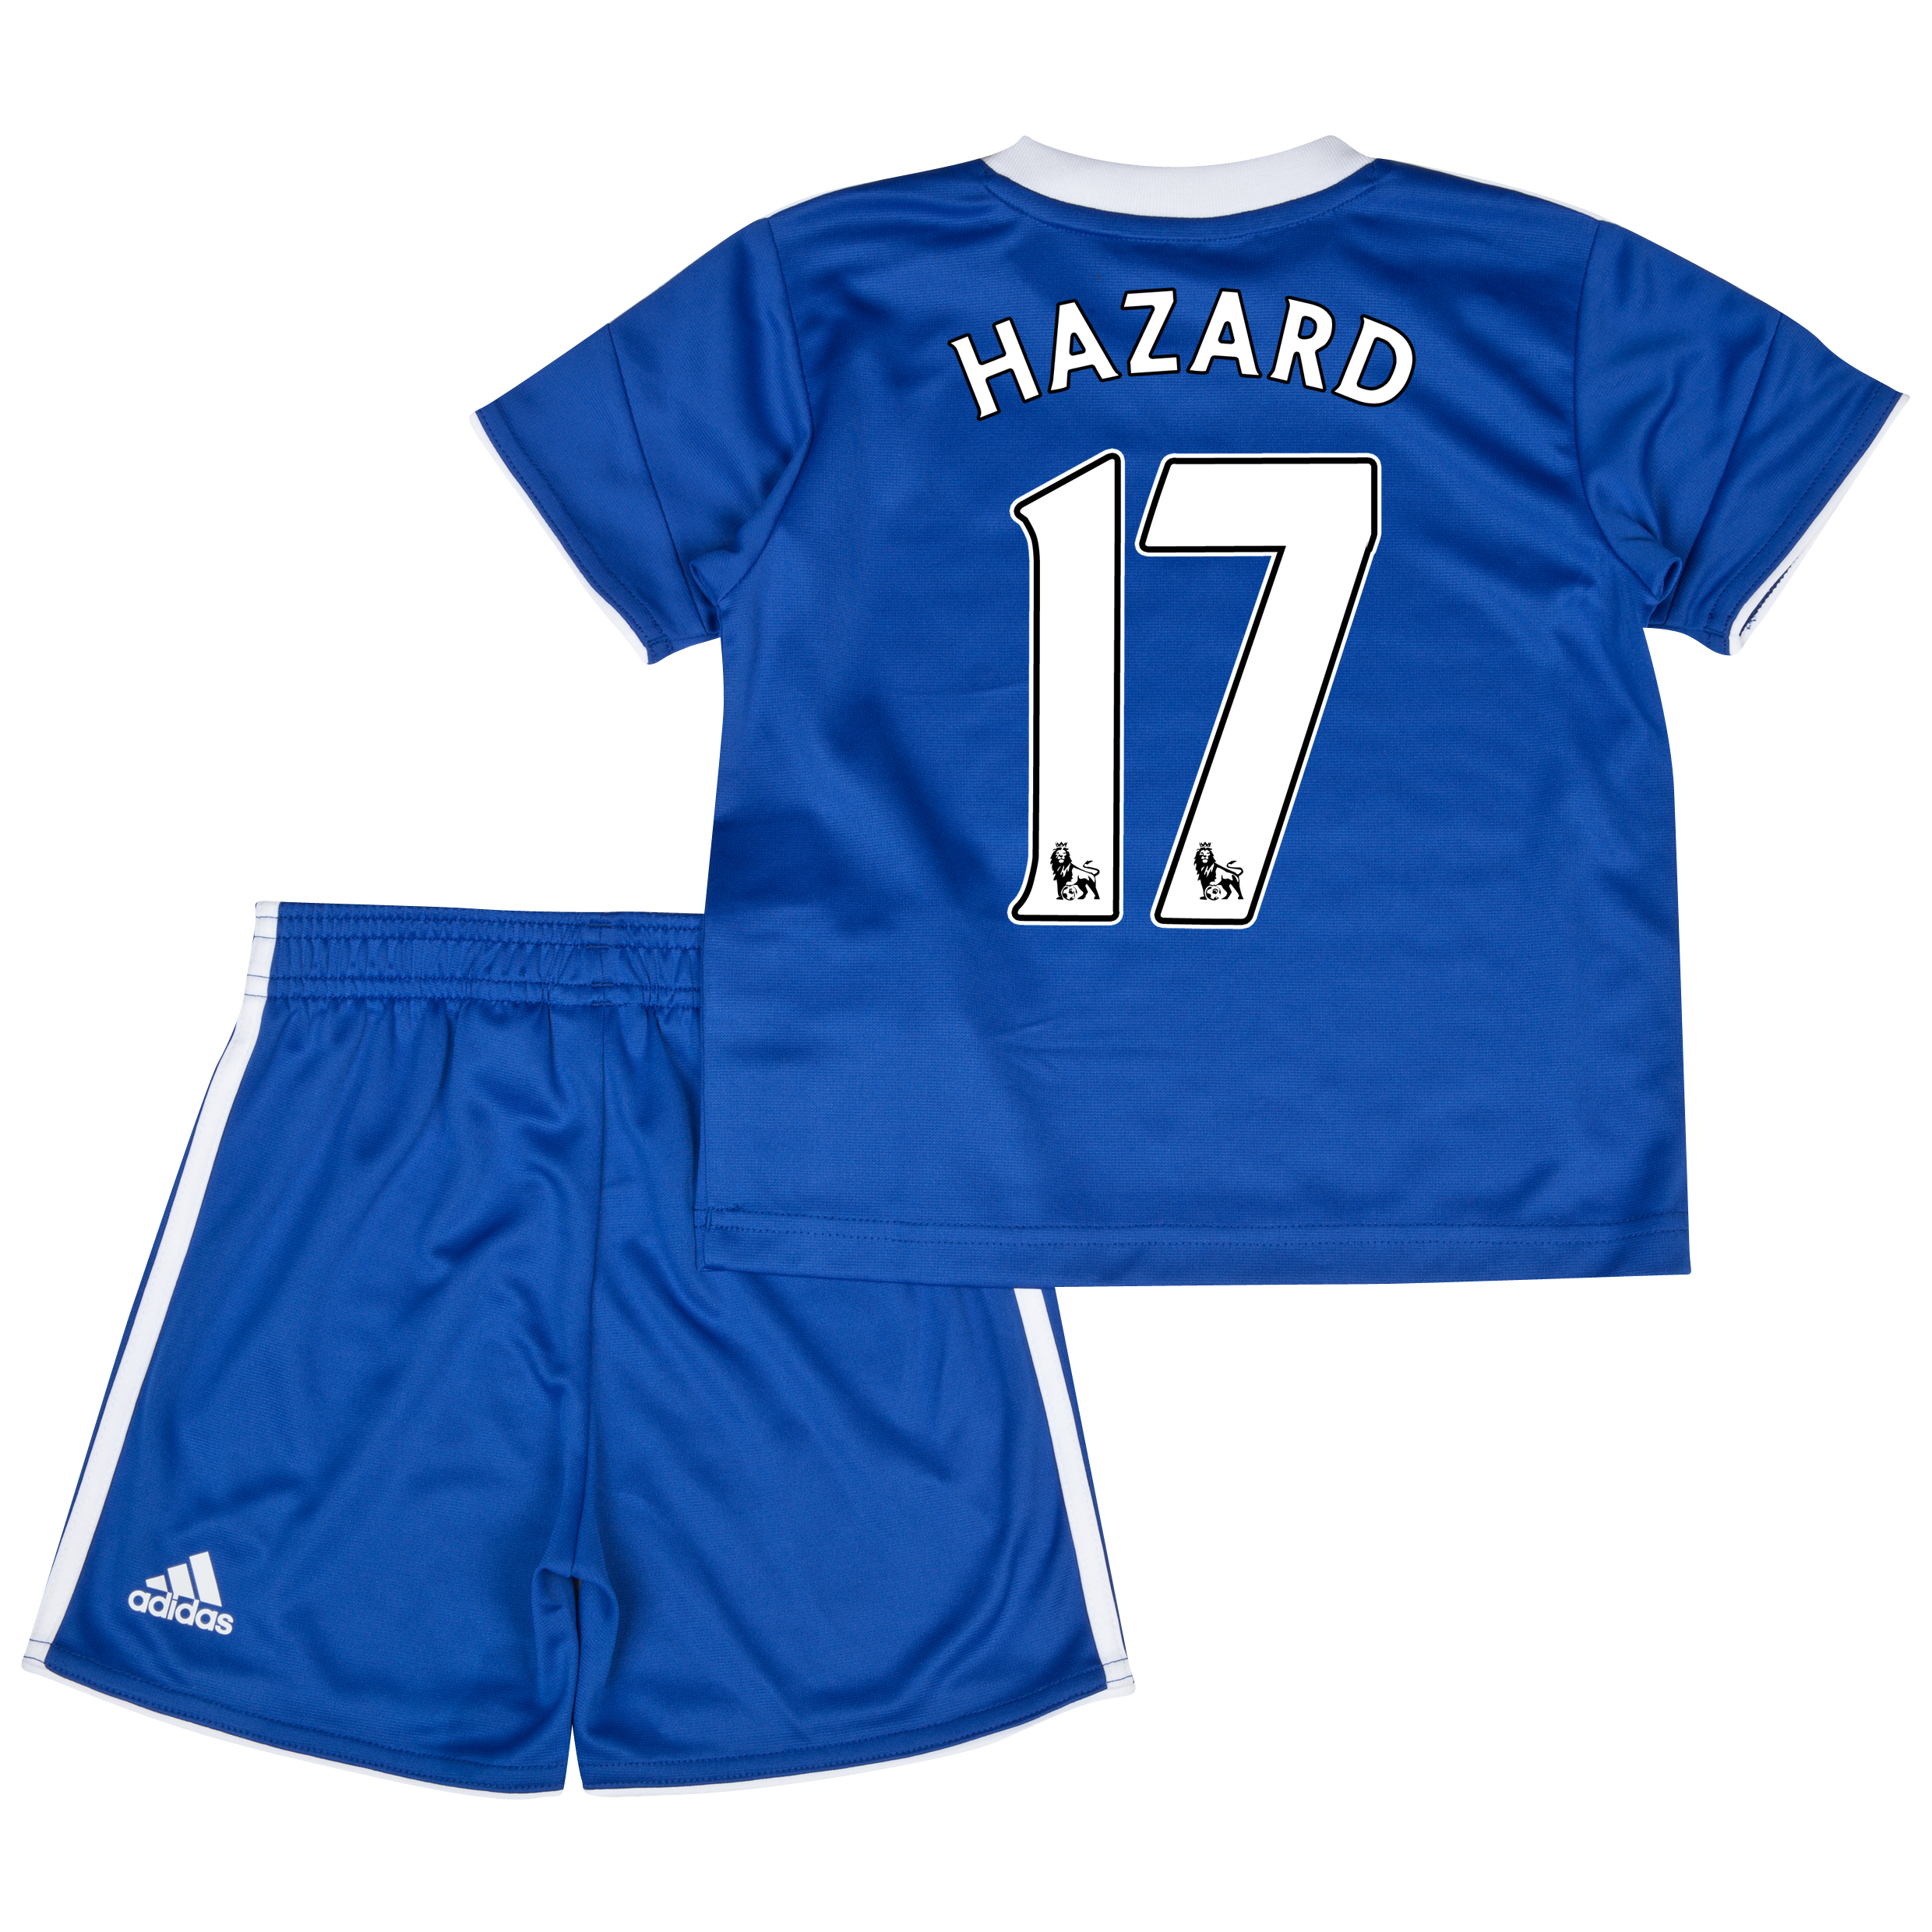 Chelsea Home Mini Kit 2013/14 with Hazard 17 printing